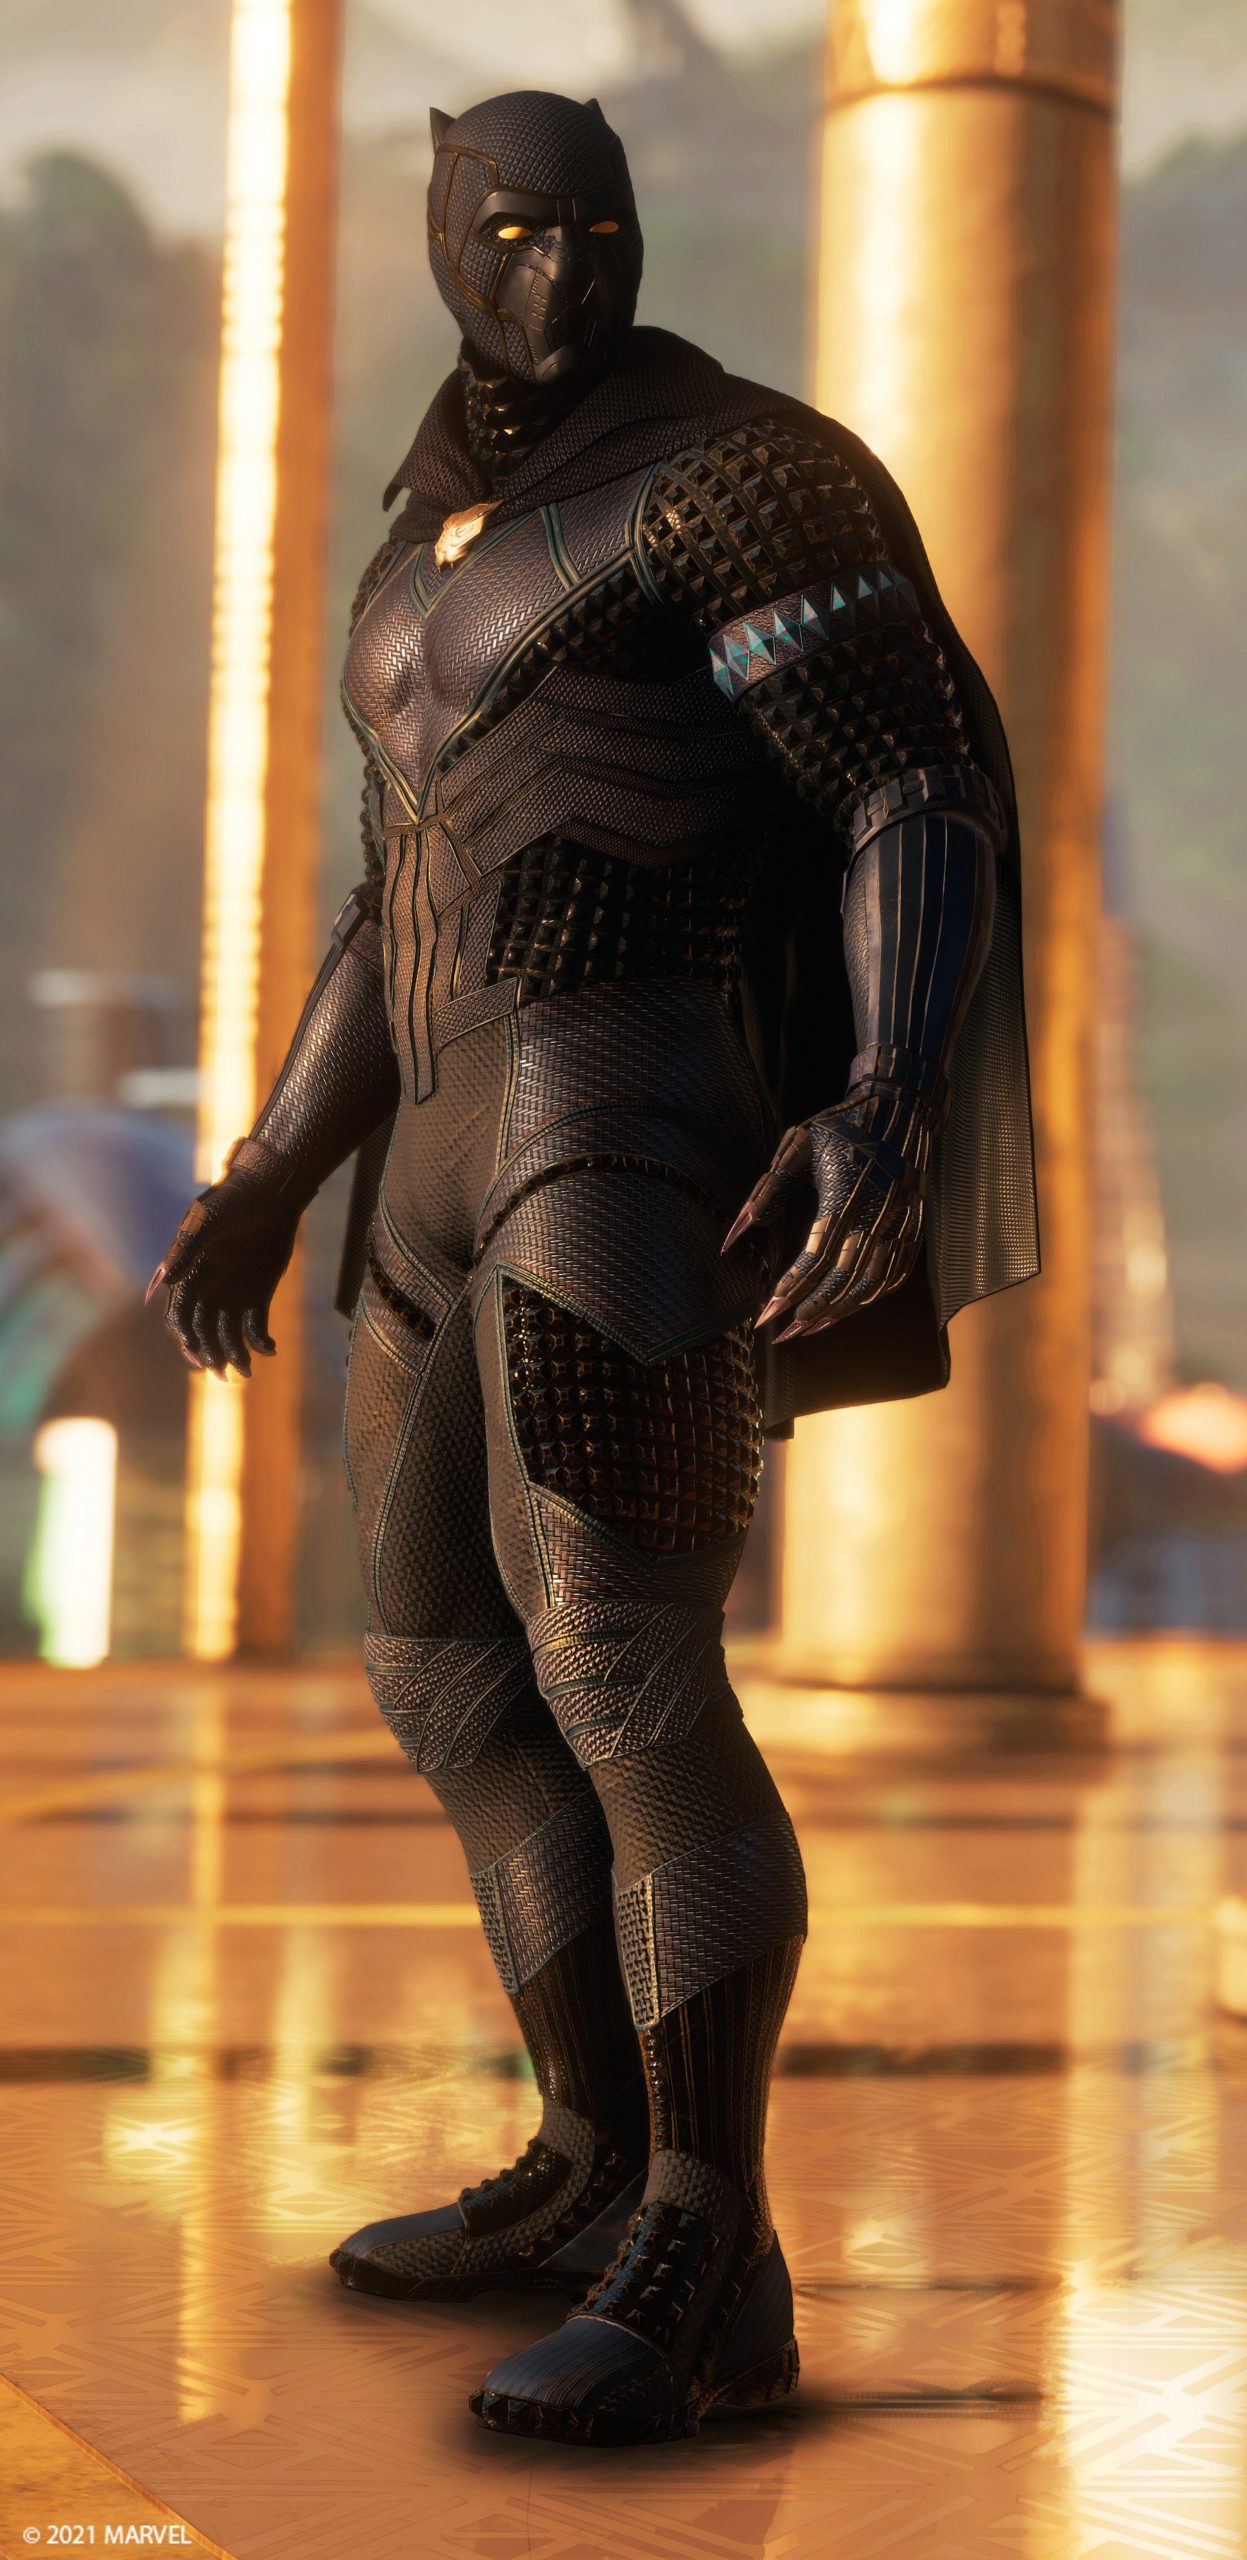 Marvel's Avengers Black Panther